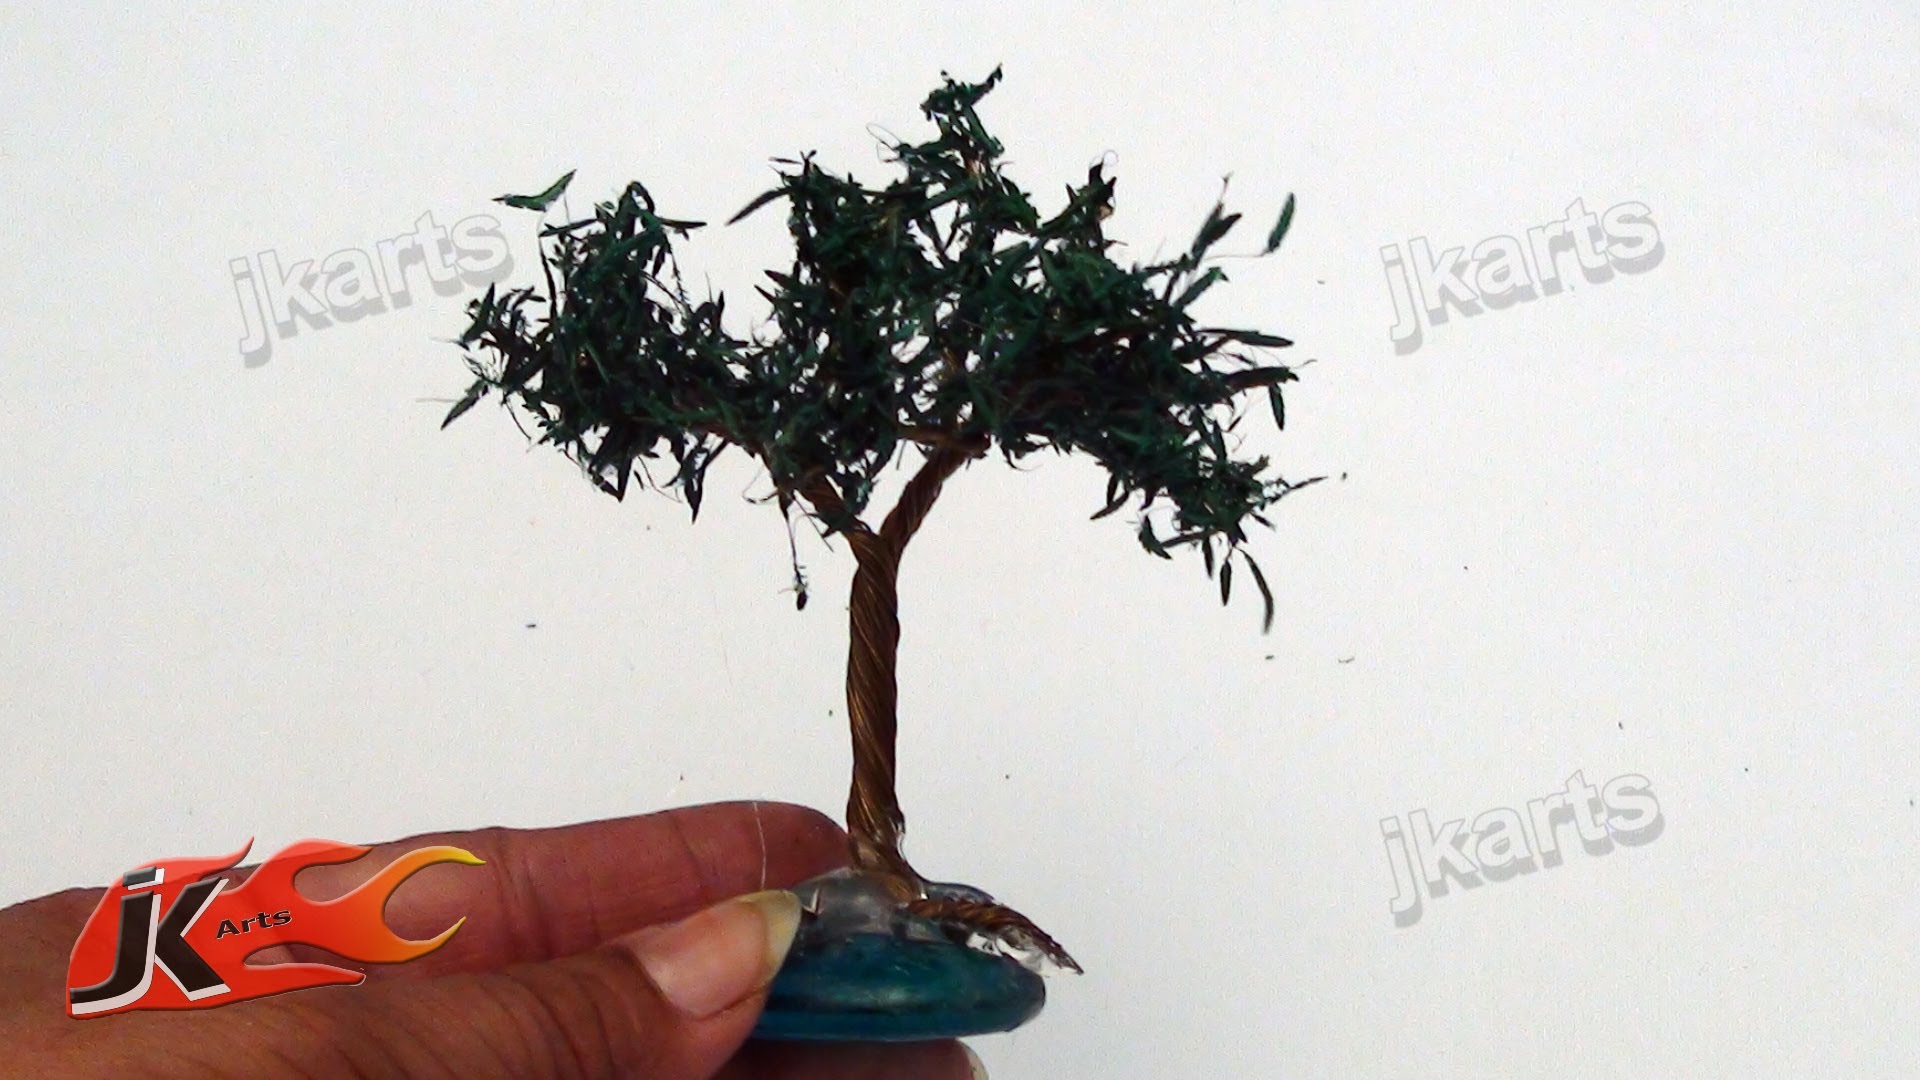 Miniature wire tree | DIY How to make | JK Arts 107 - YouTube